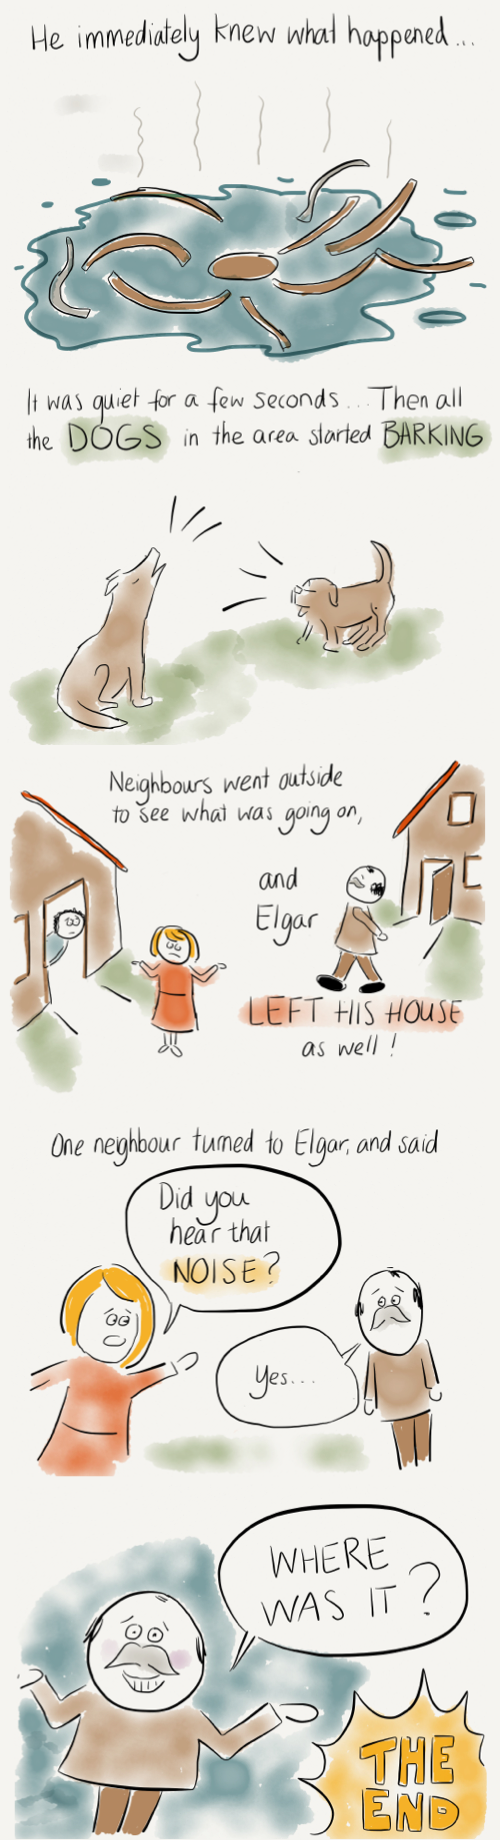 Elgar's explosion